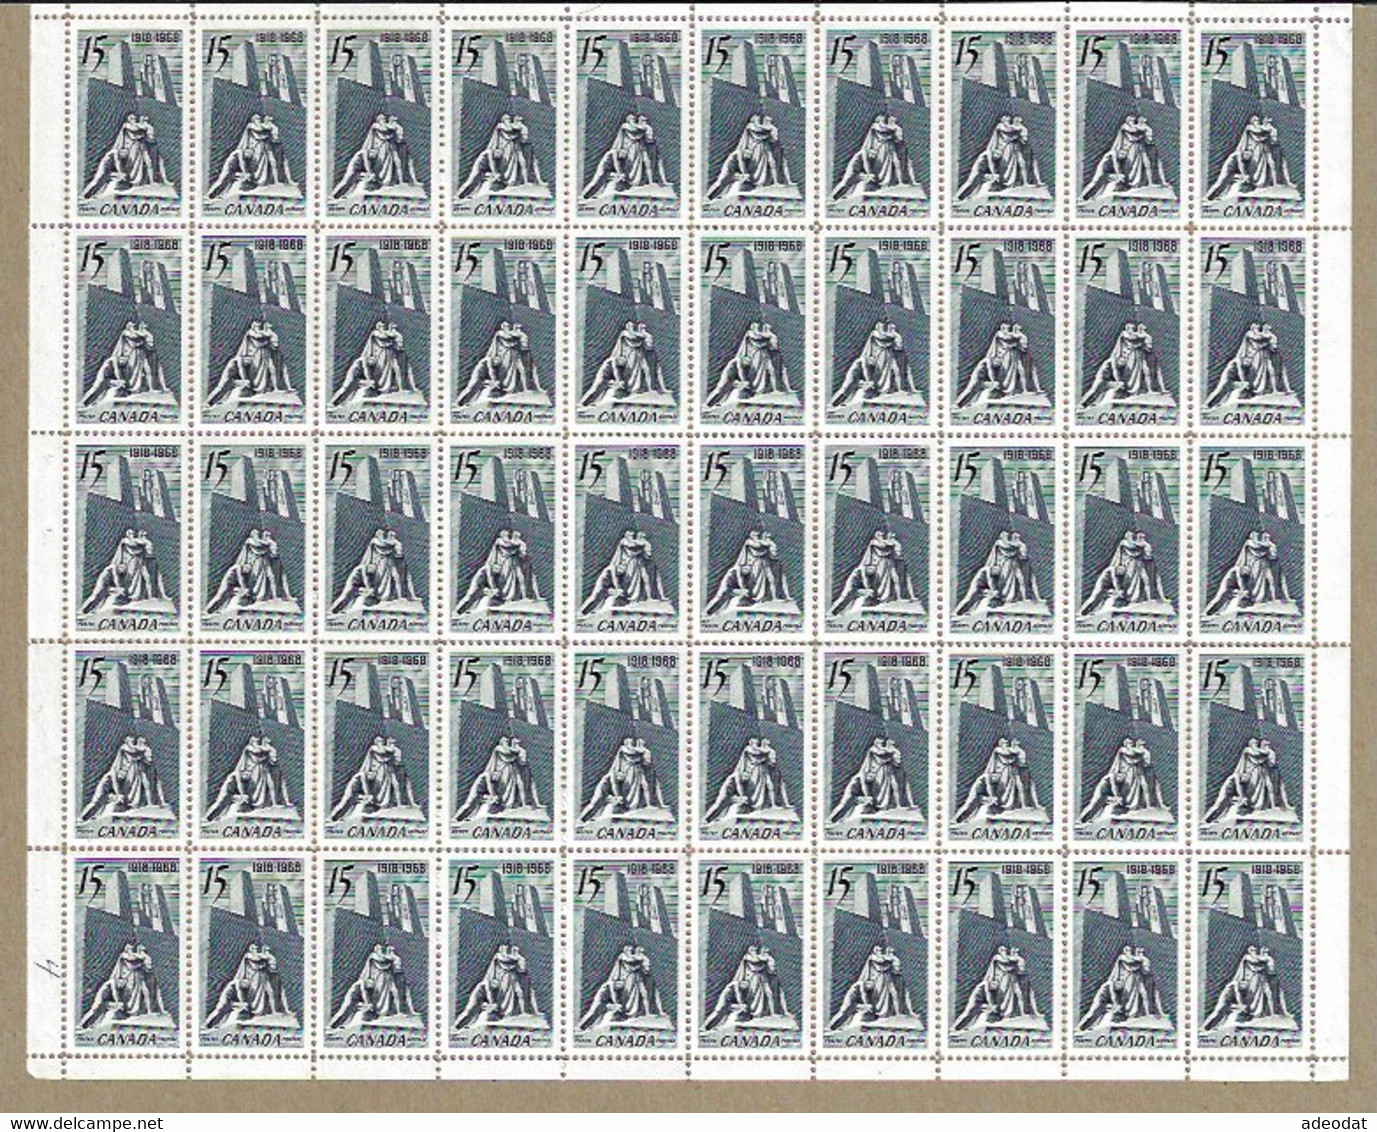 CANADA 1968 SCOTT 486 MNH SHEET OF 50 CAT VALUE US $100 - Full Sheets & Multiples